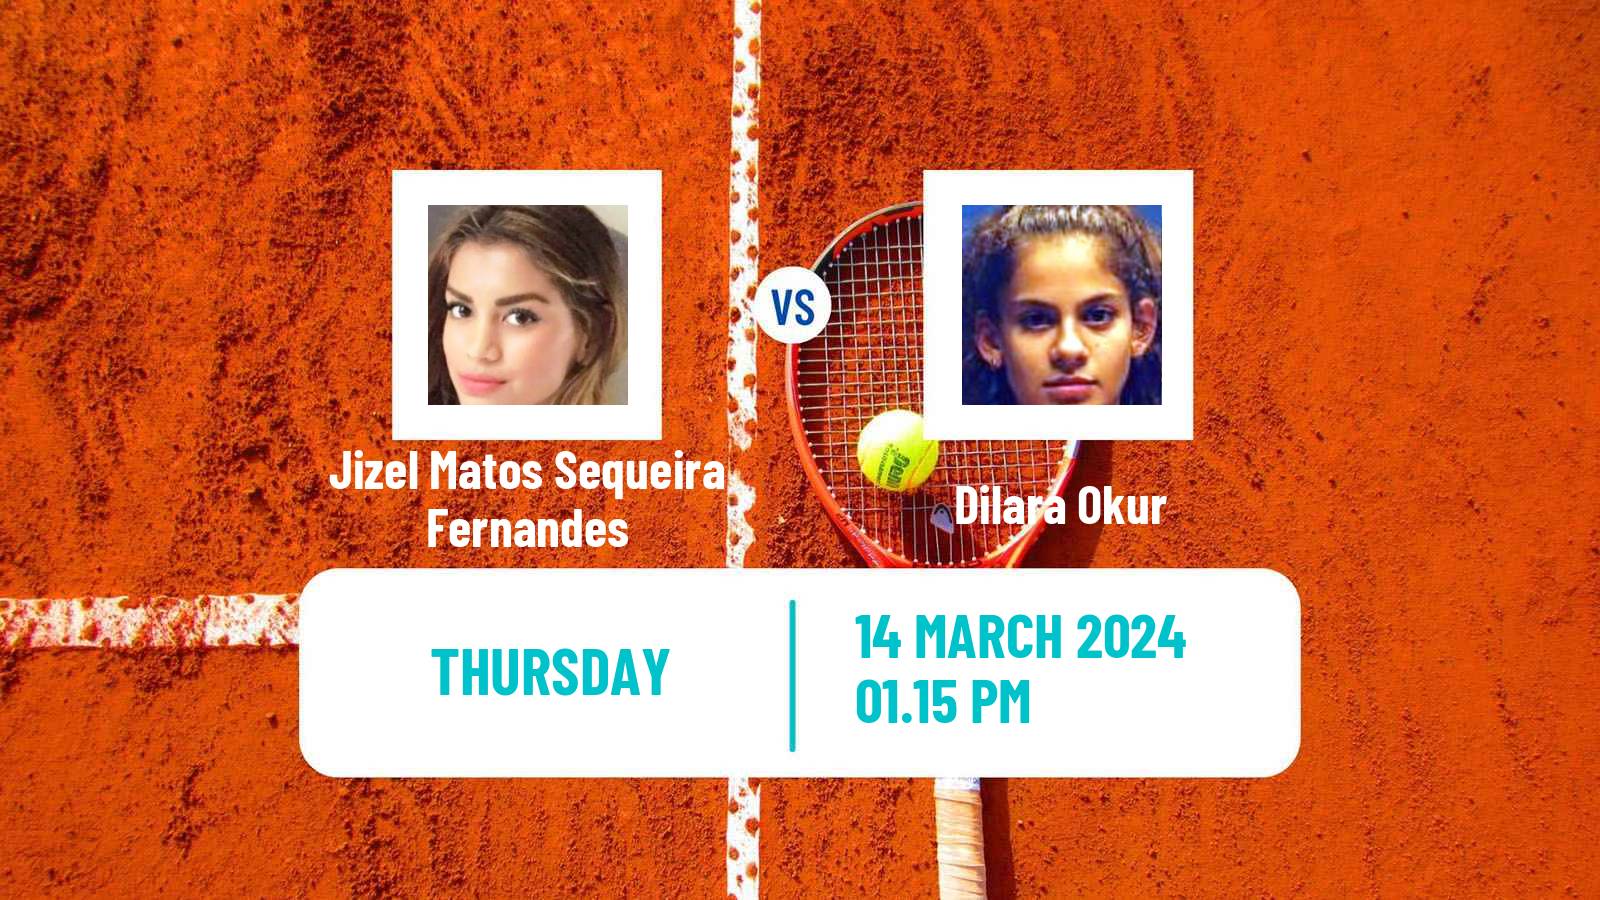 Tennis ITF W15 Antalya 5 Women Jizel Matos Sequeira Fernandes - Dilara Okur